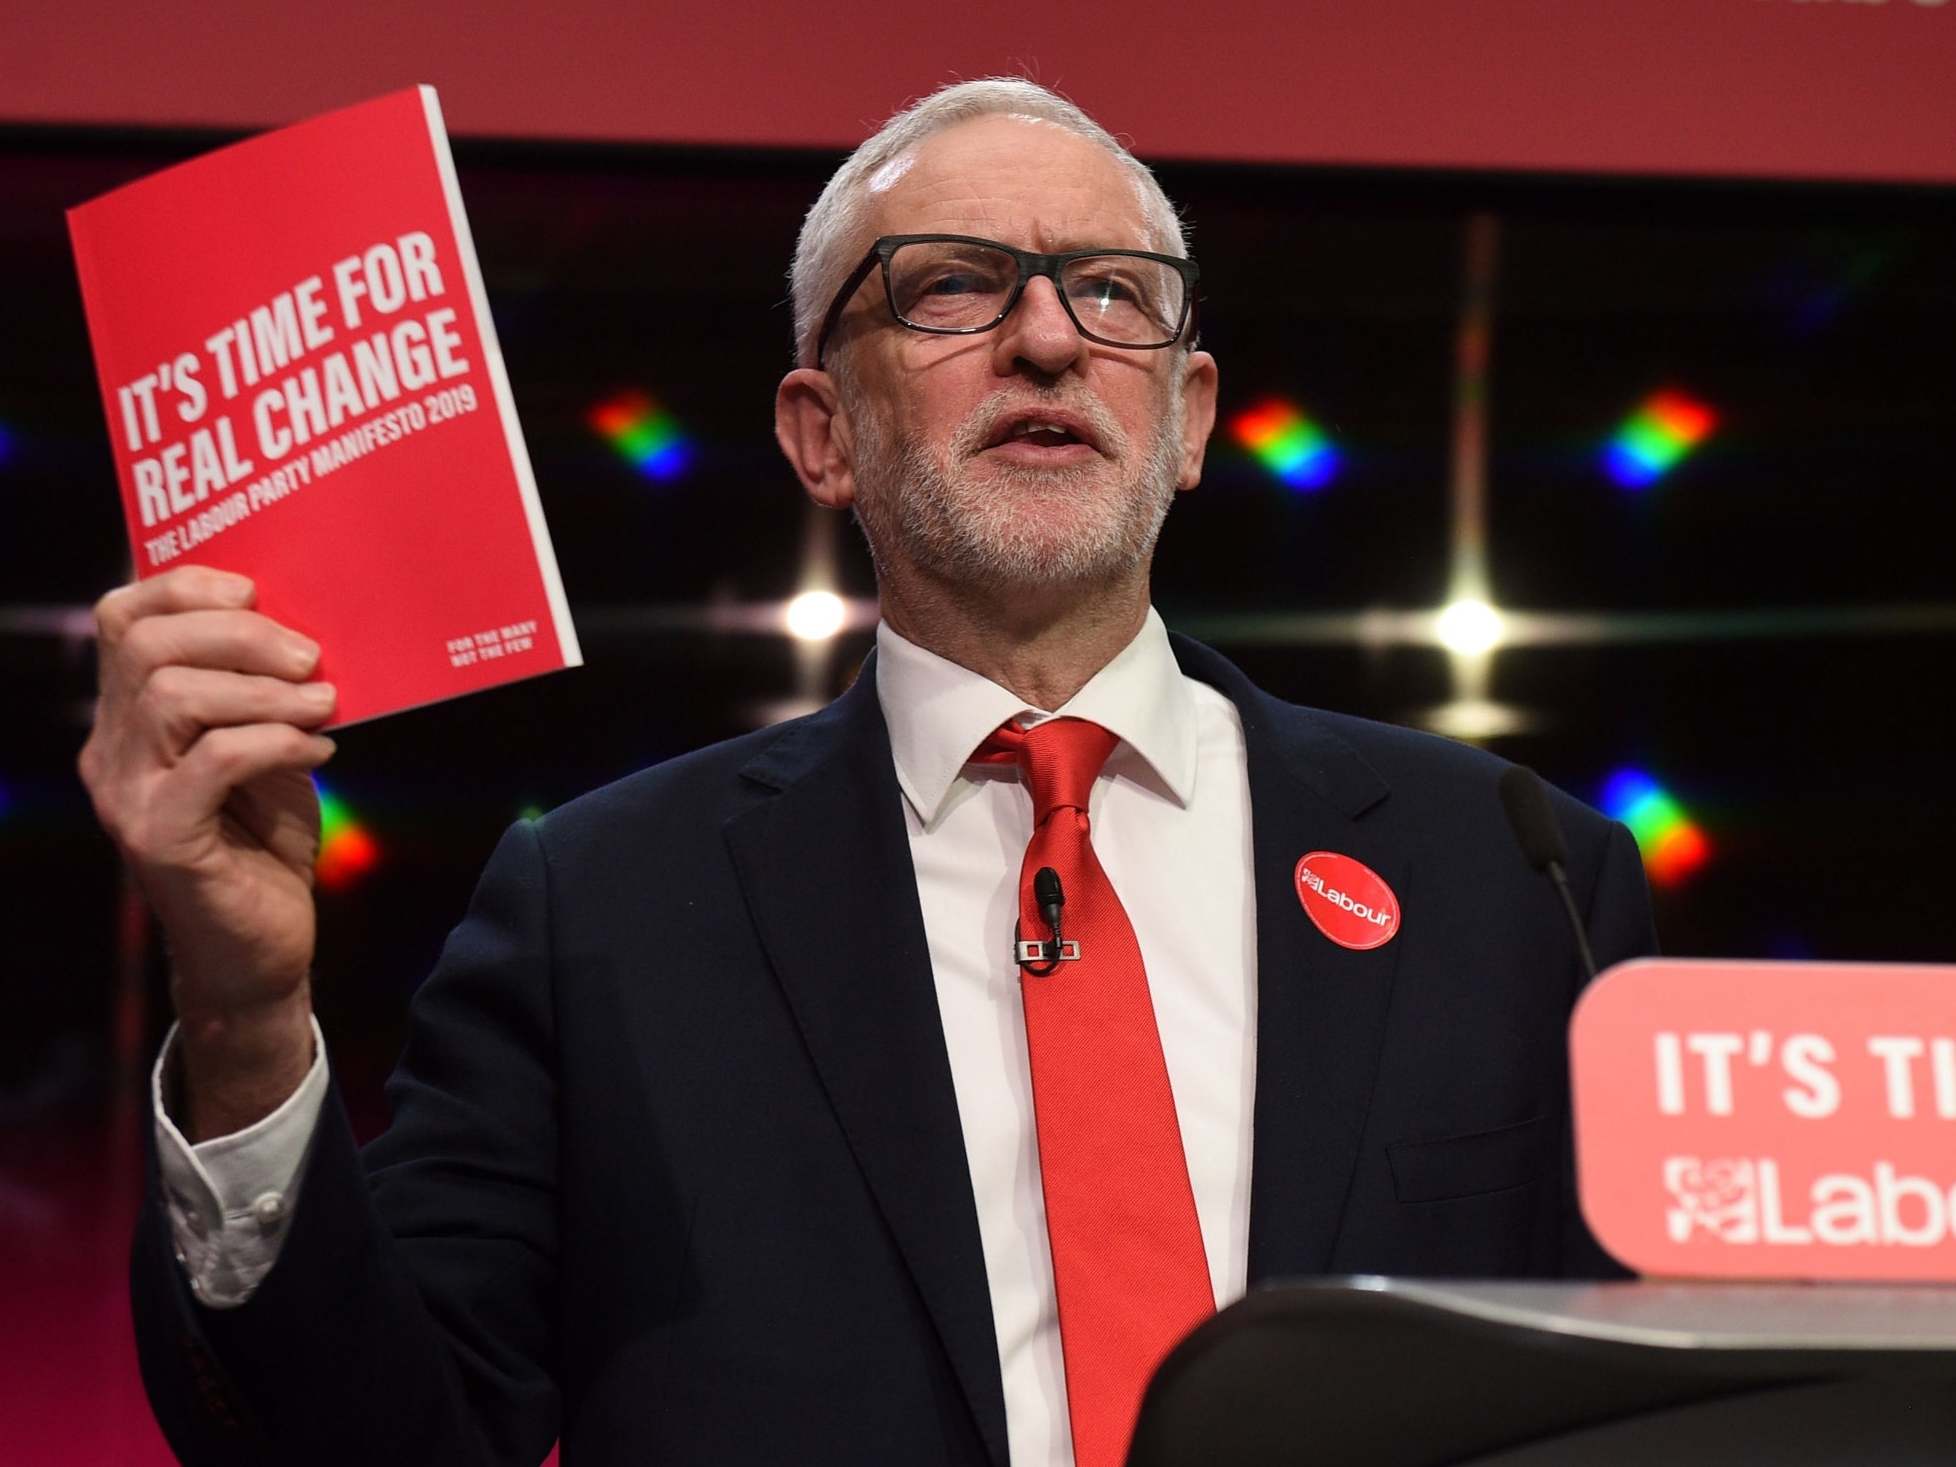 Labour manifesto: Corbyn vows to rip up Victorian-era abortion laws